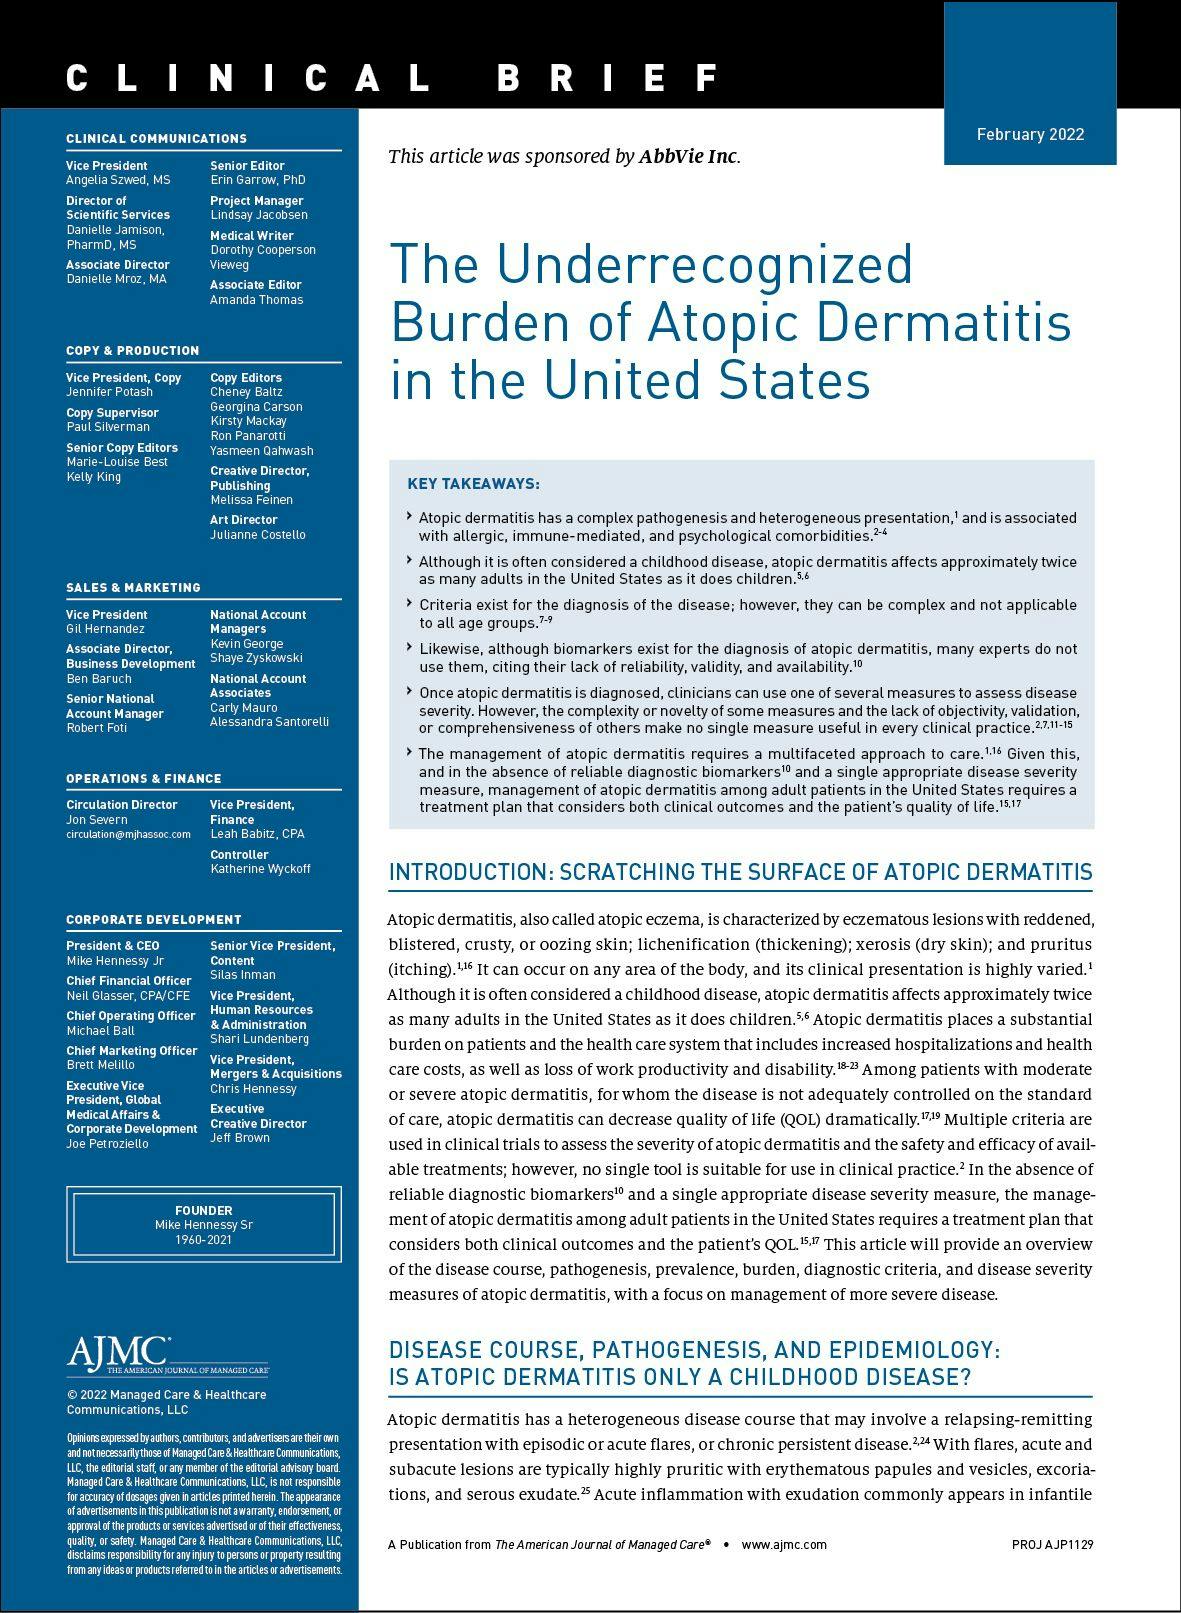 The Underrecognized Burden of Atopic Dermatitis in the United States